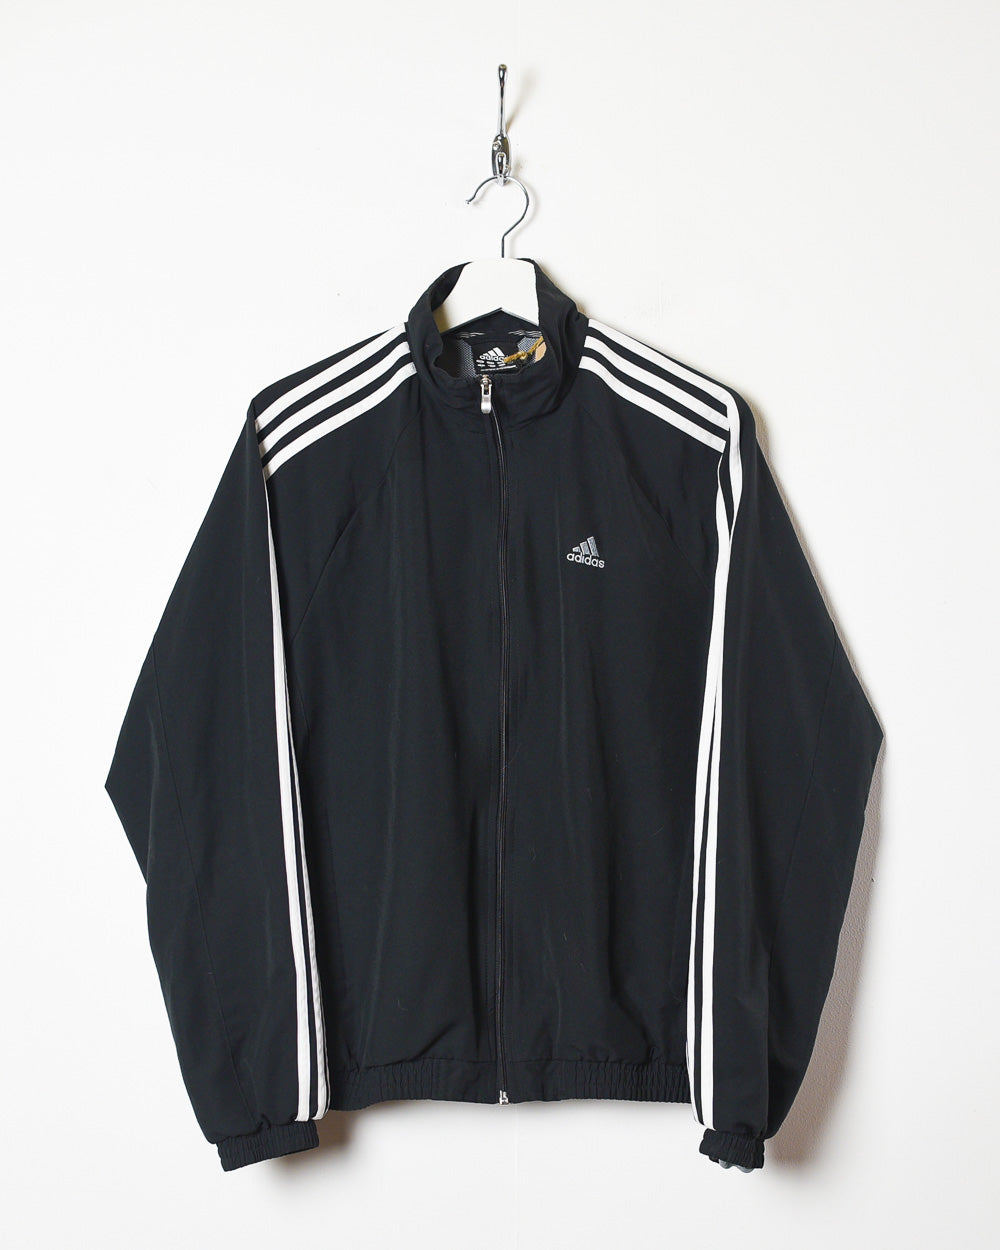 Black Adidas Windbreaker Jacket - Small